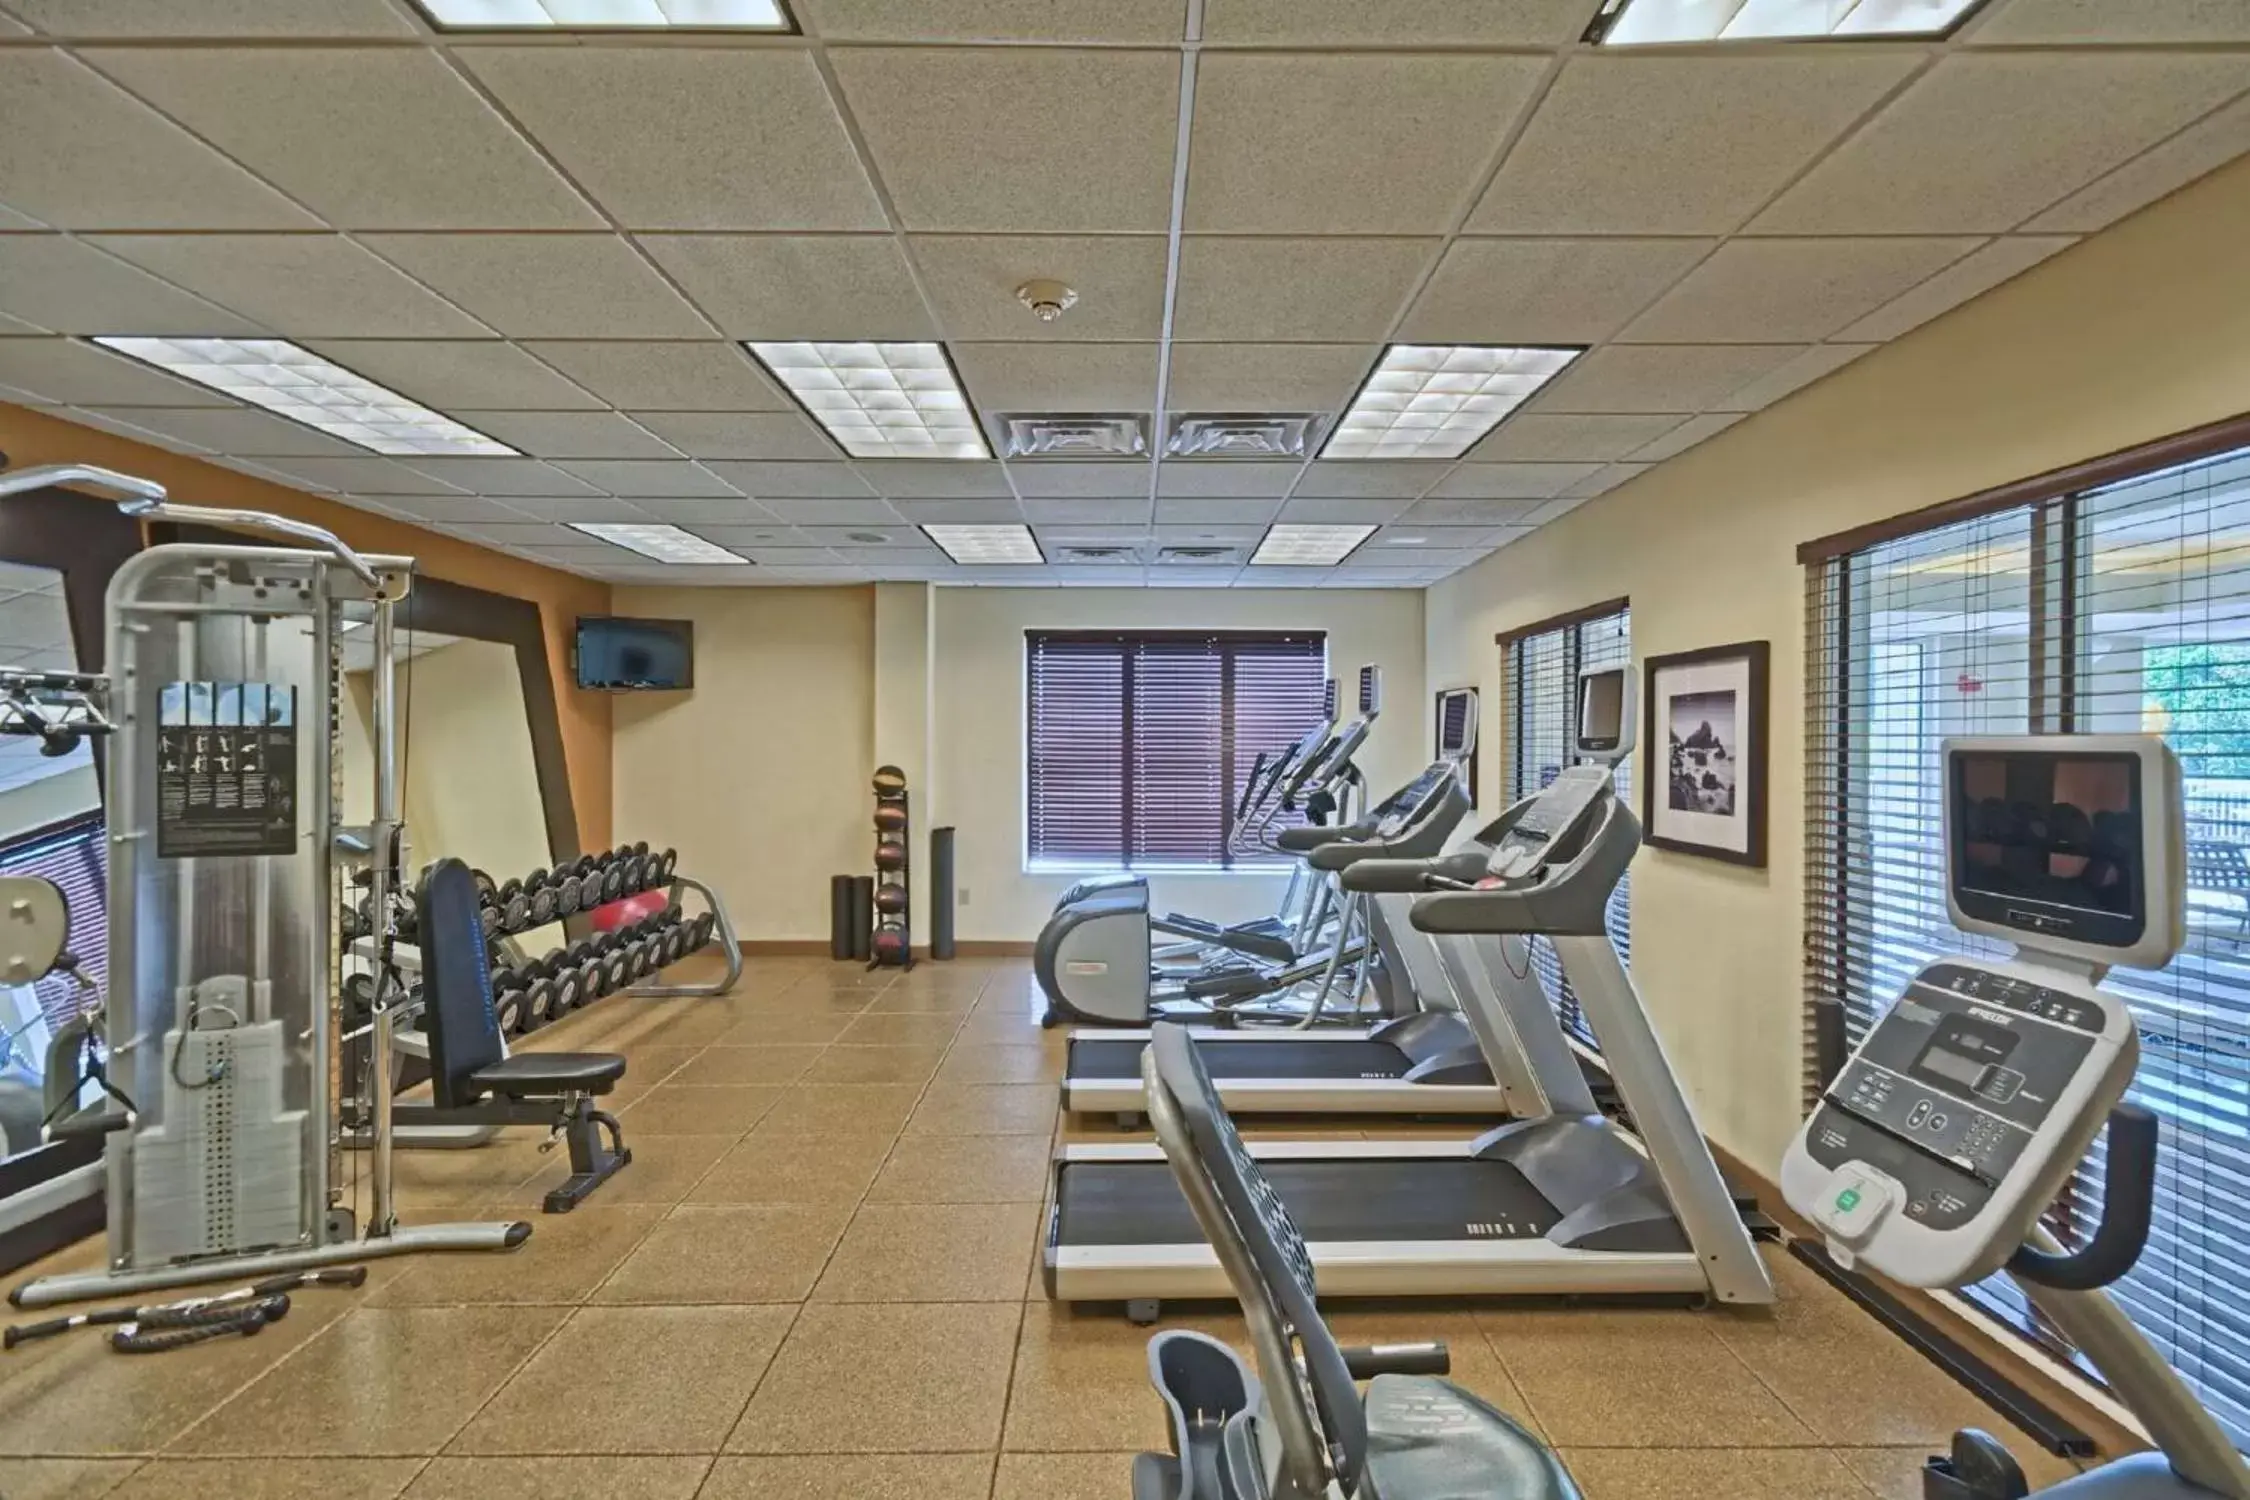 Fitness centre/facilities, Fitness Center/Facilities in Hilton Garden Inn by Hilton Mount Laurel